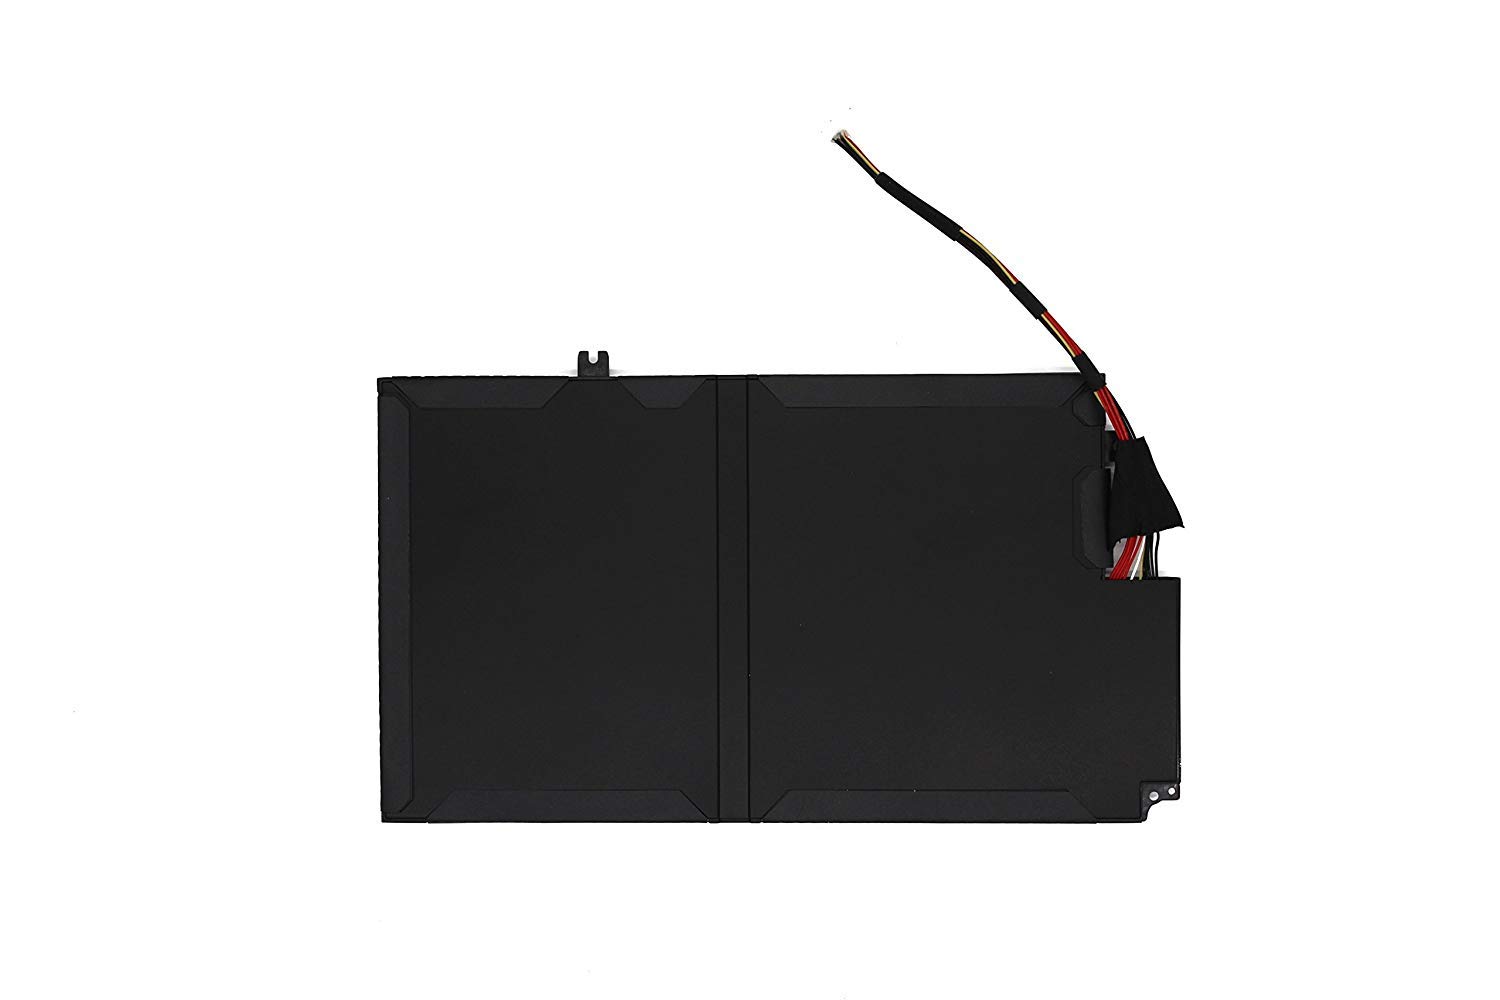 WISTAR Laptop Battery Compatible for EL04XL Battery for Hp Envy Touchsmart 4-1000 Envy 4-1000 TPN-C102 HSTNN-IB3R 681879-171 681949-001 681879-541 Hstnn-ub3r